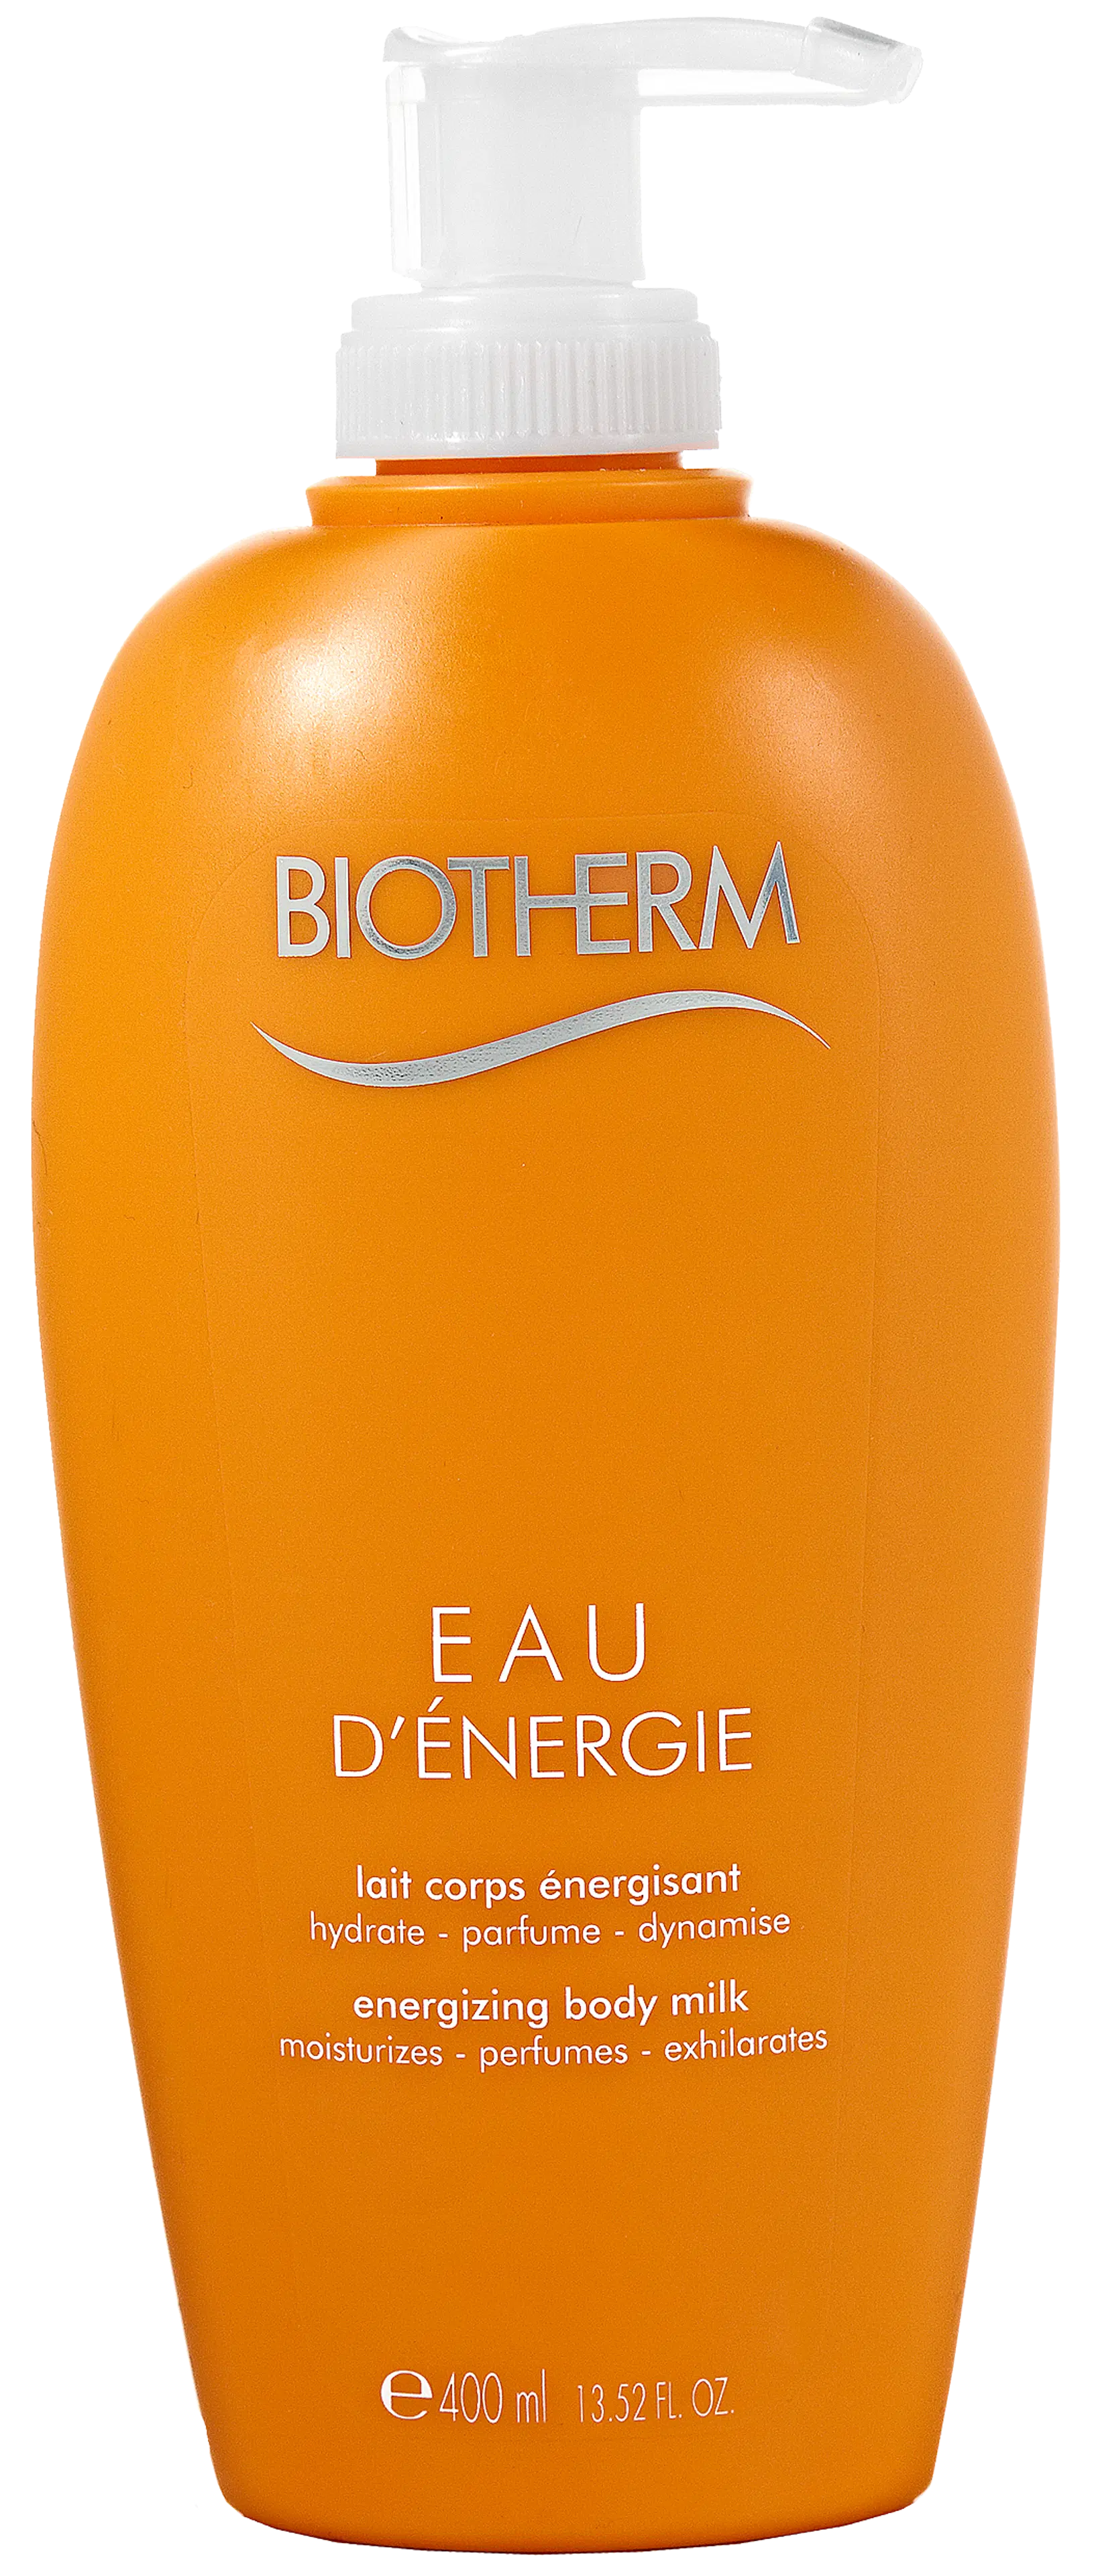 Biotherm Eau d'Energié Body Milk vartaloemulsio 400 ml